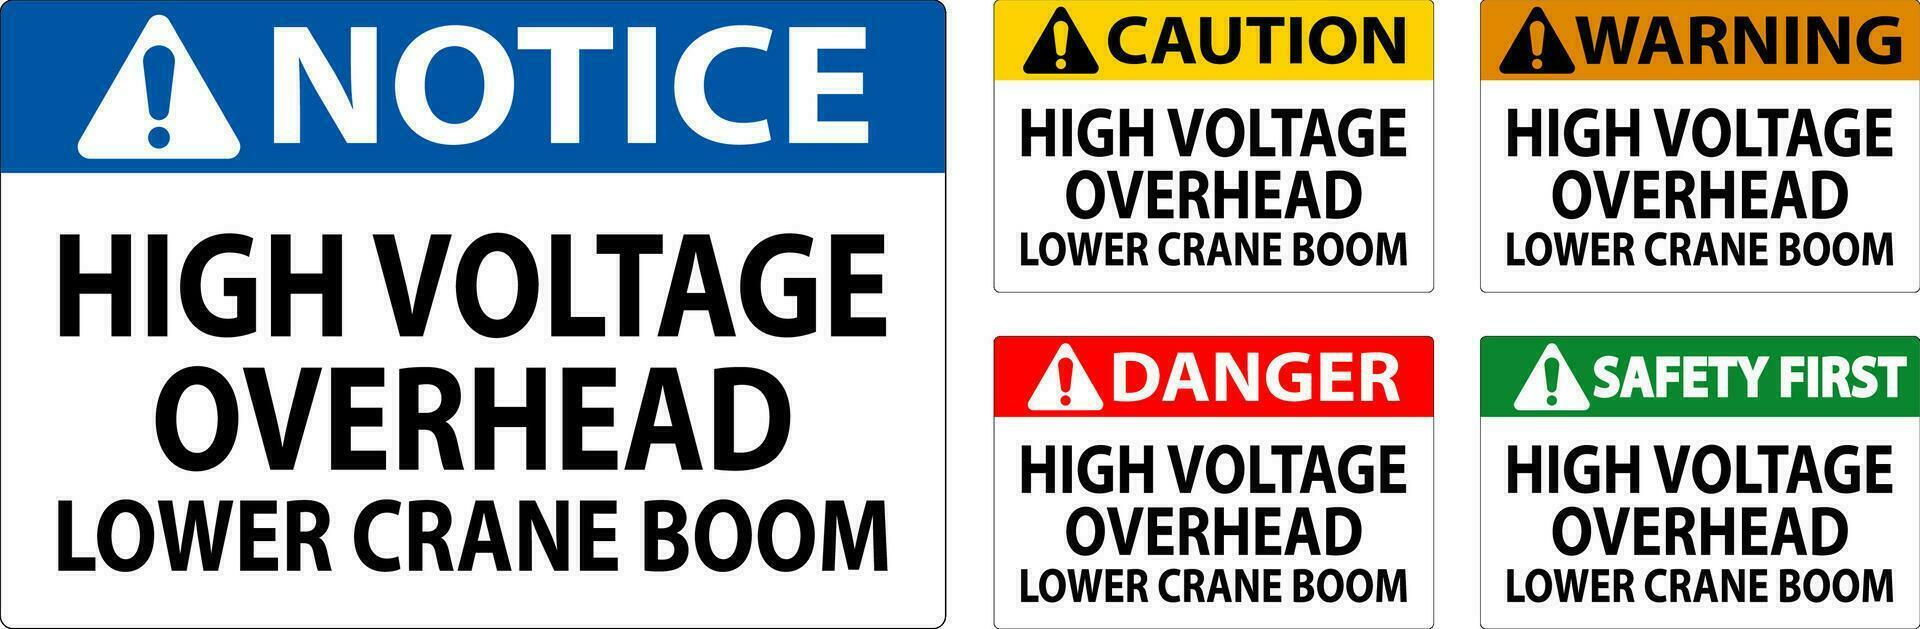 Danger Sign High Voltage Overhead, Lower Crane Boom vector